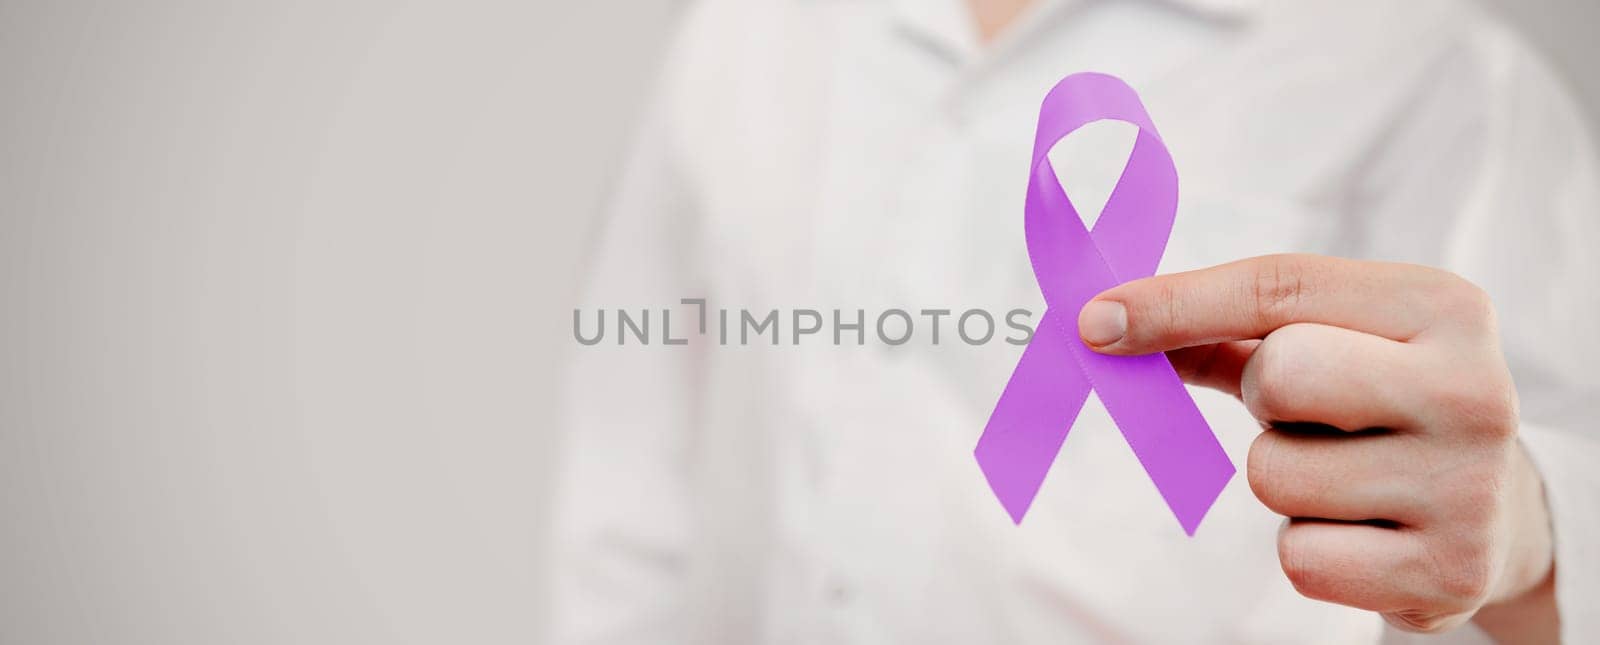 Man holding pancreatic cancer awareness ribbon by simpson33